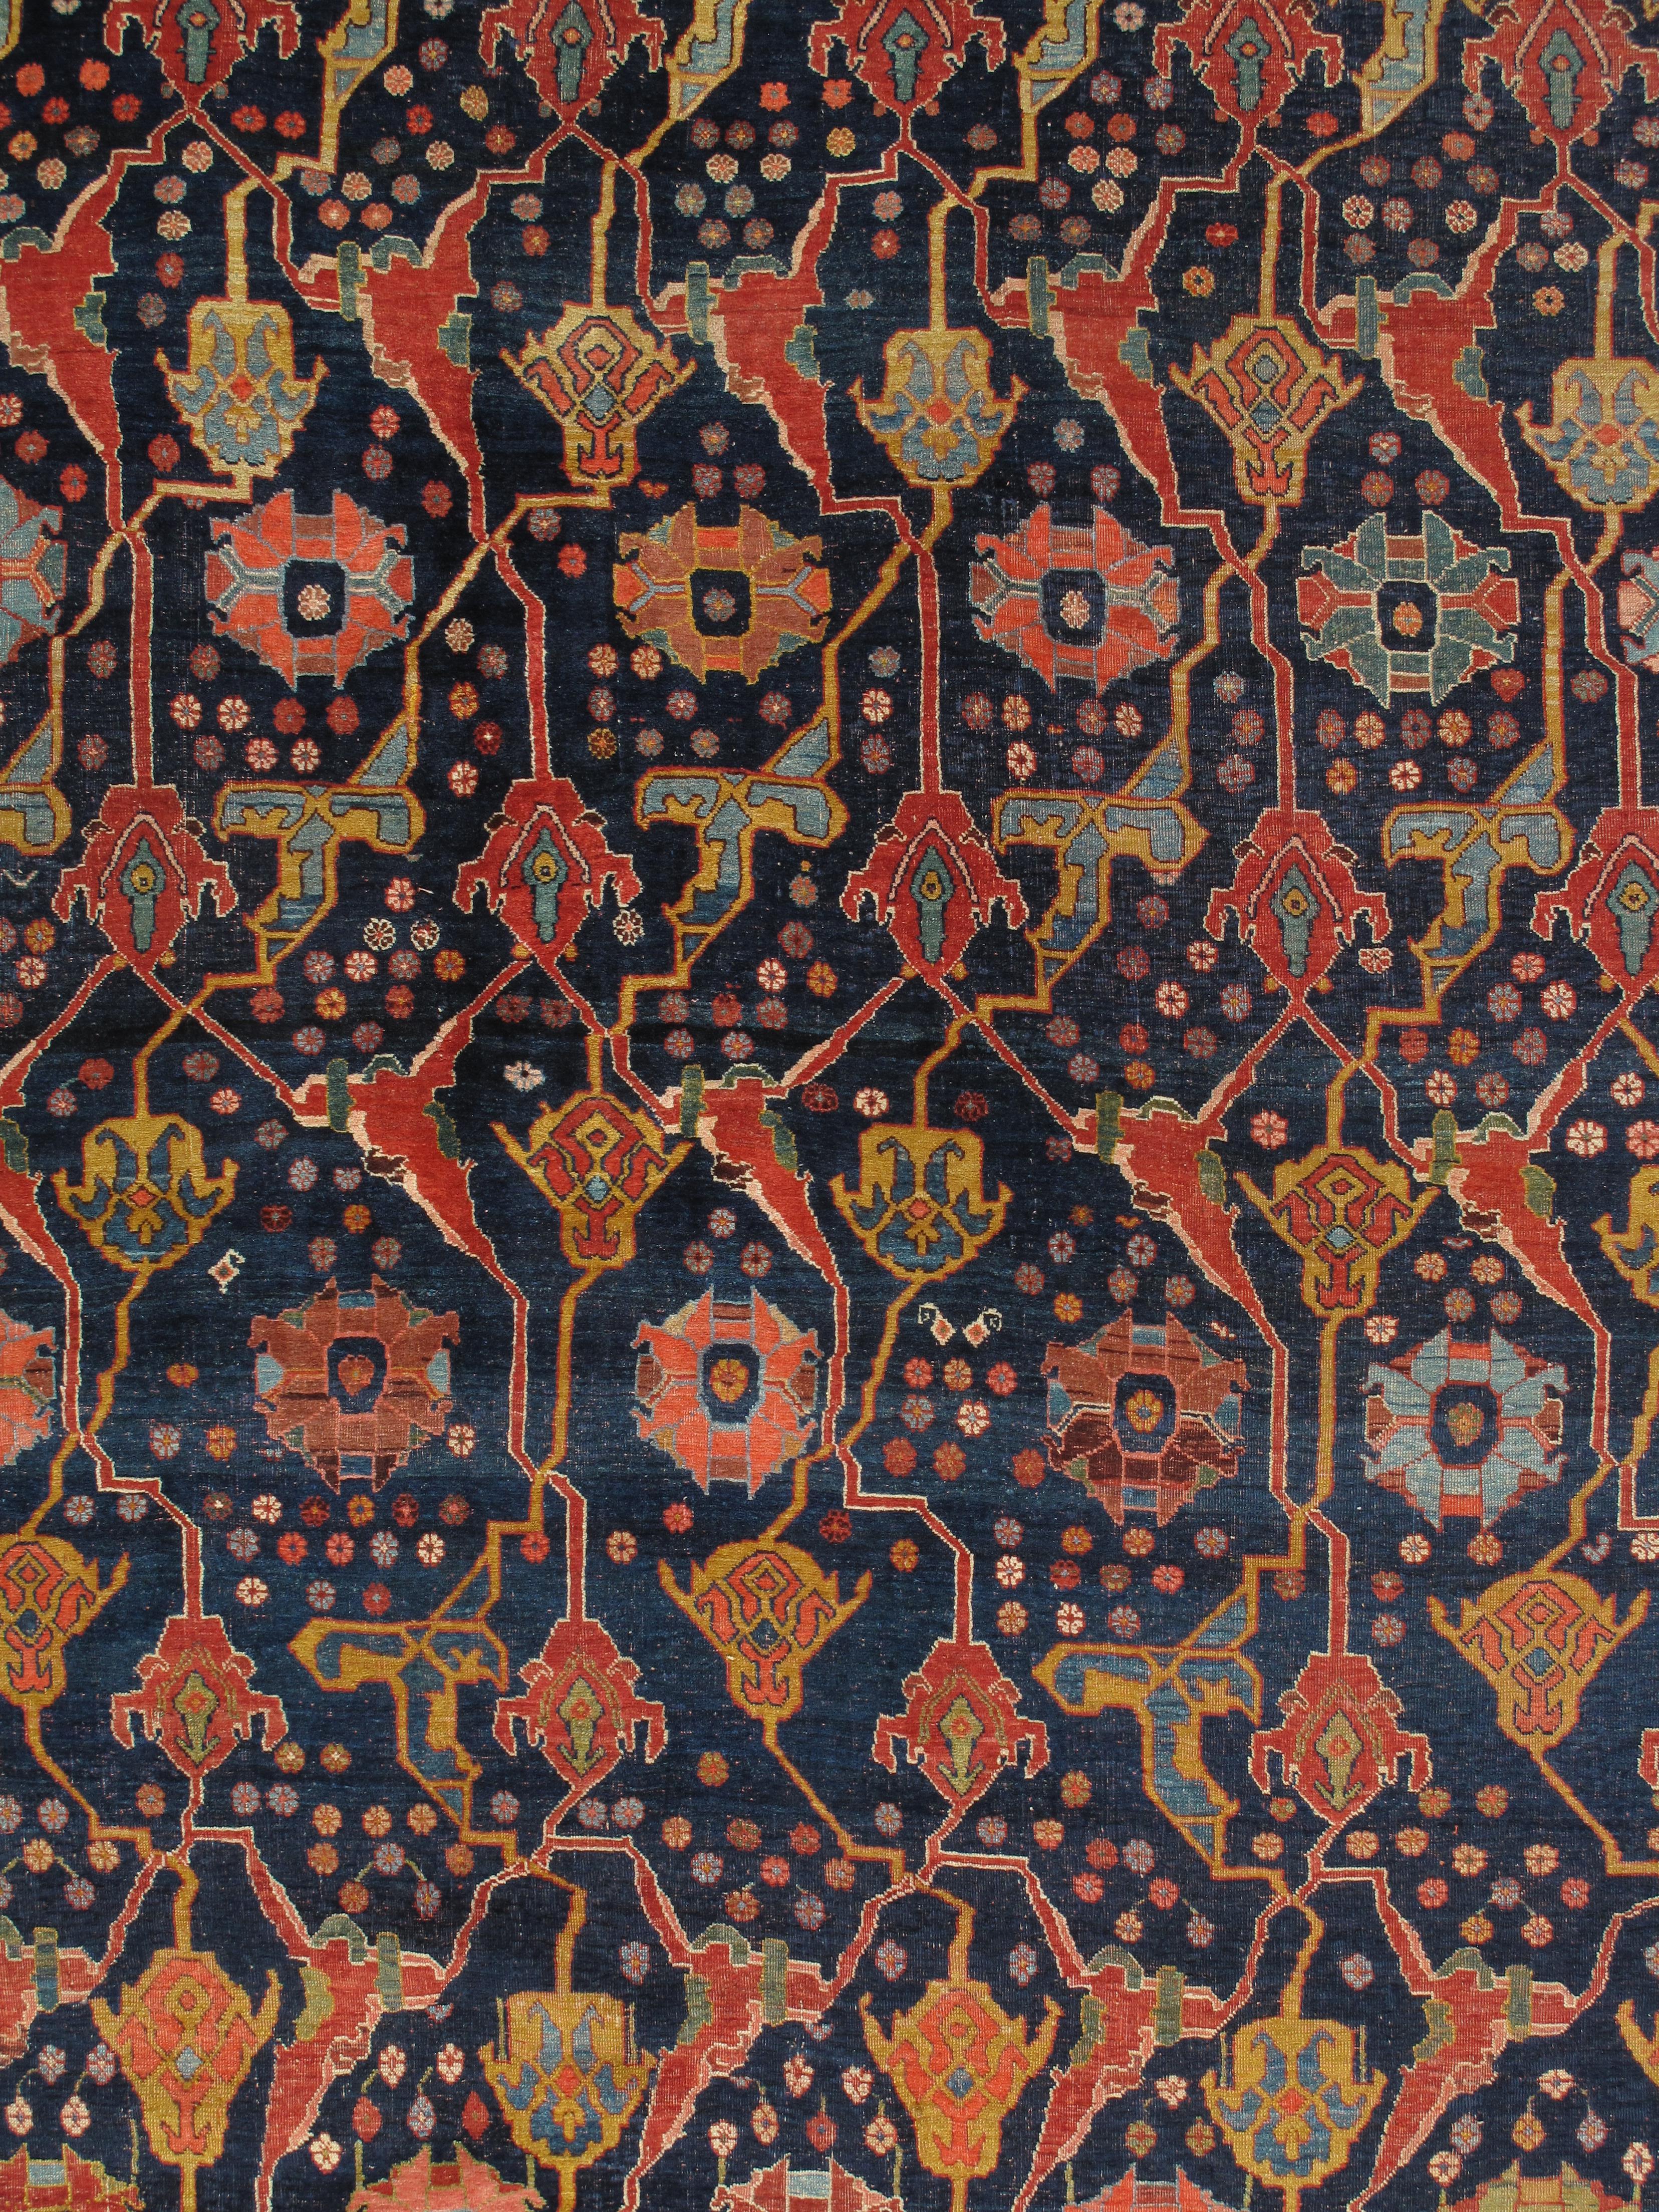 19th Century Antique Bijar Carpet Oriental Carpet, Handmade, Navy, Red, Light Blue and Green For Sale